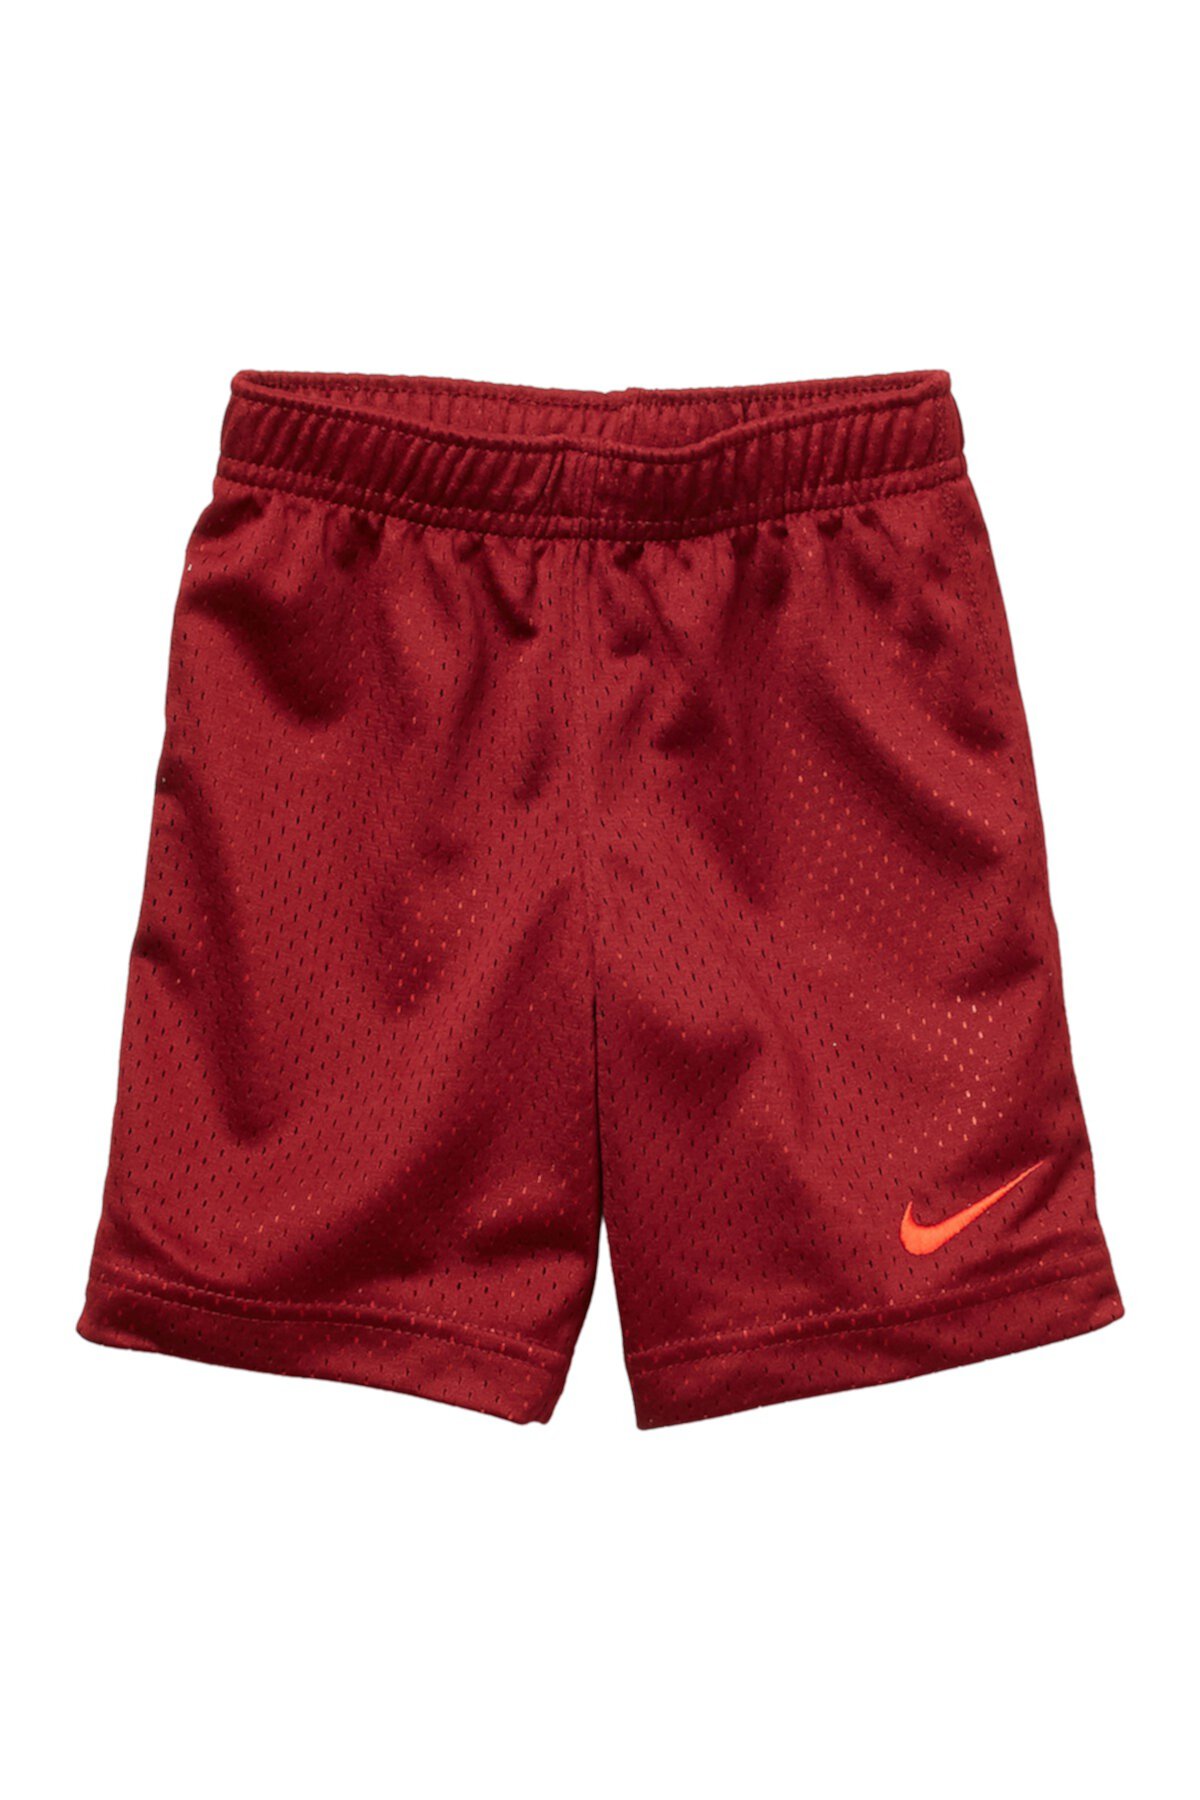 Classic Mesh Contrast Shorts (Toddler Boys) Nike